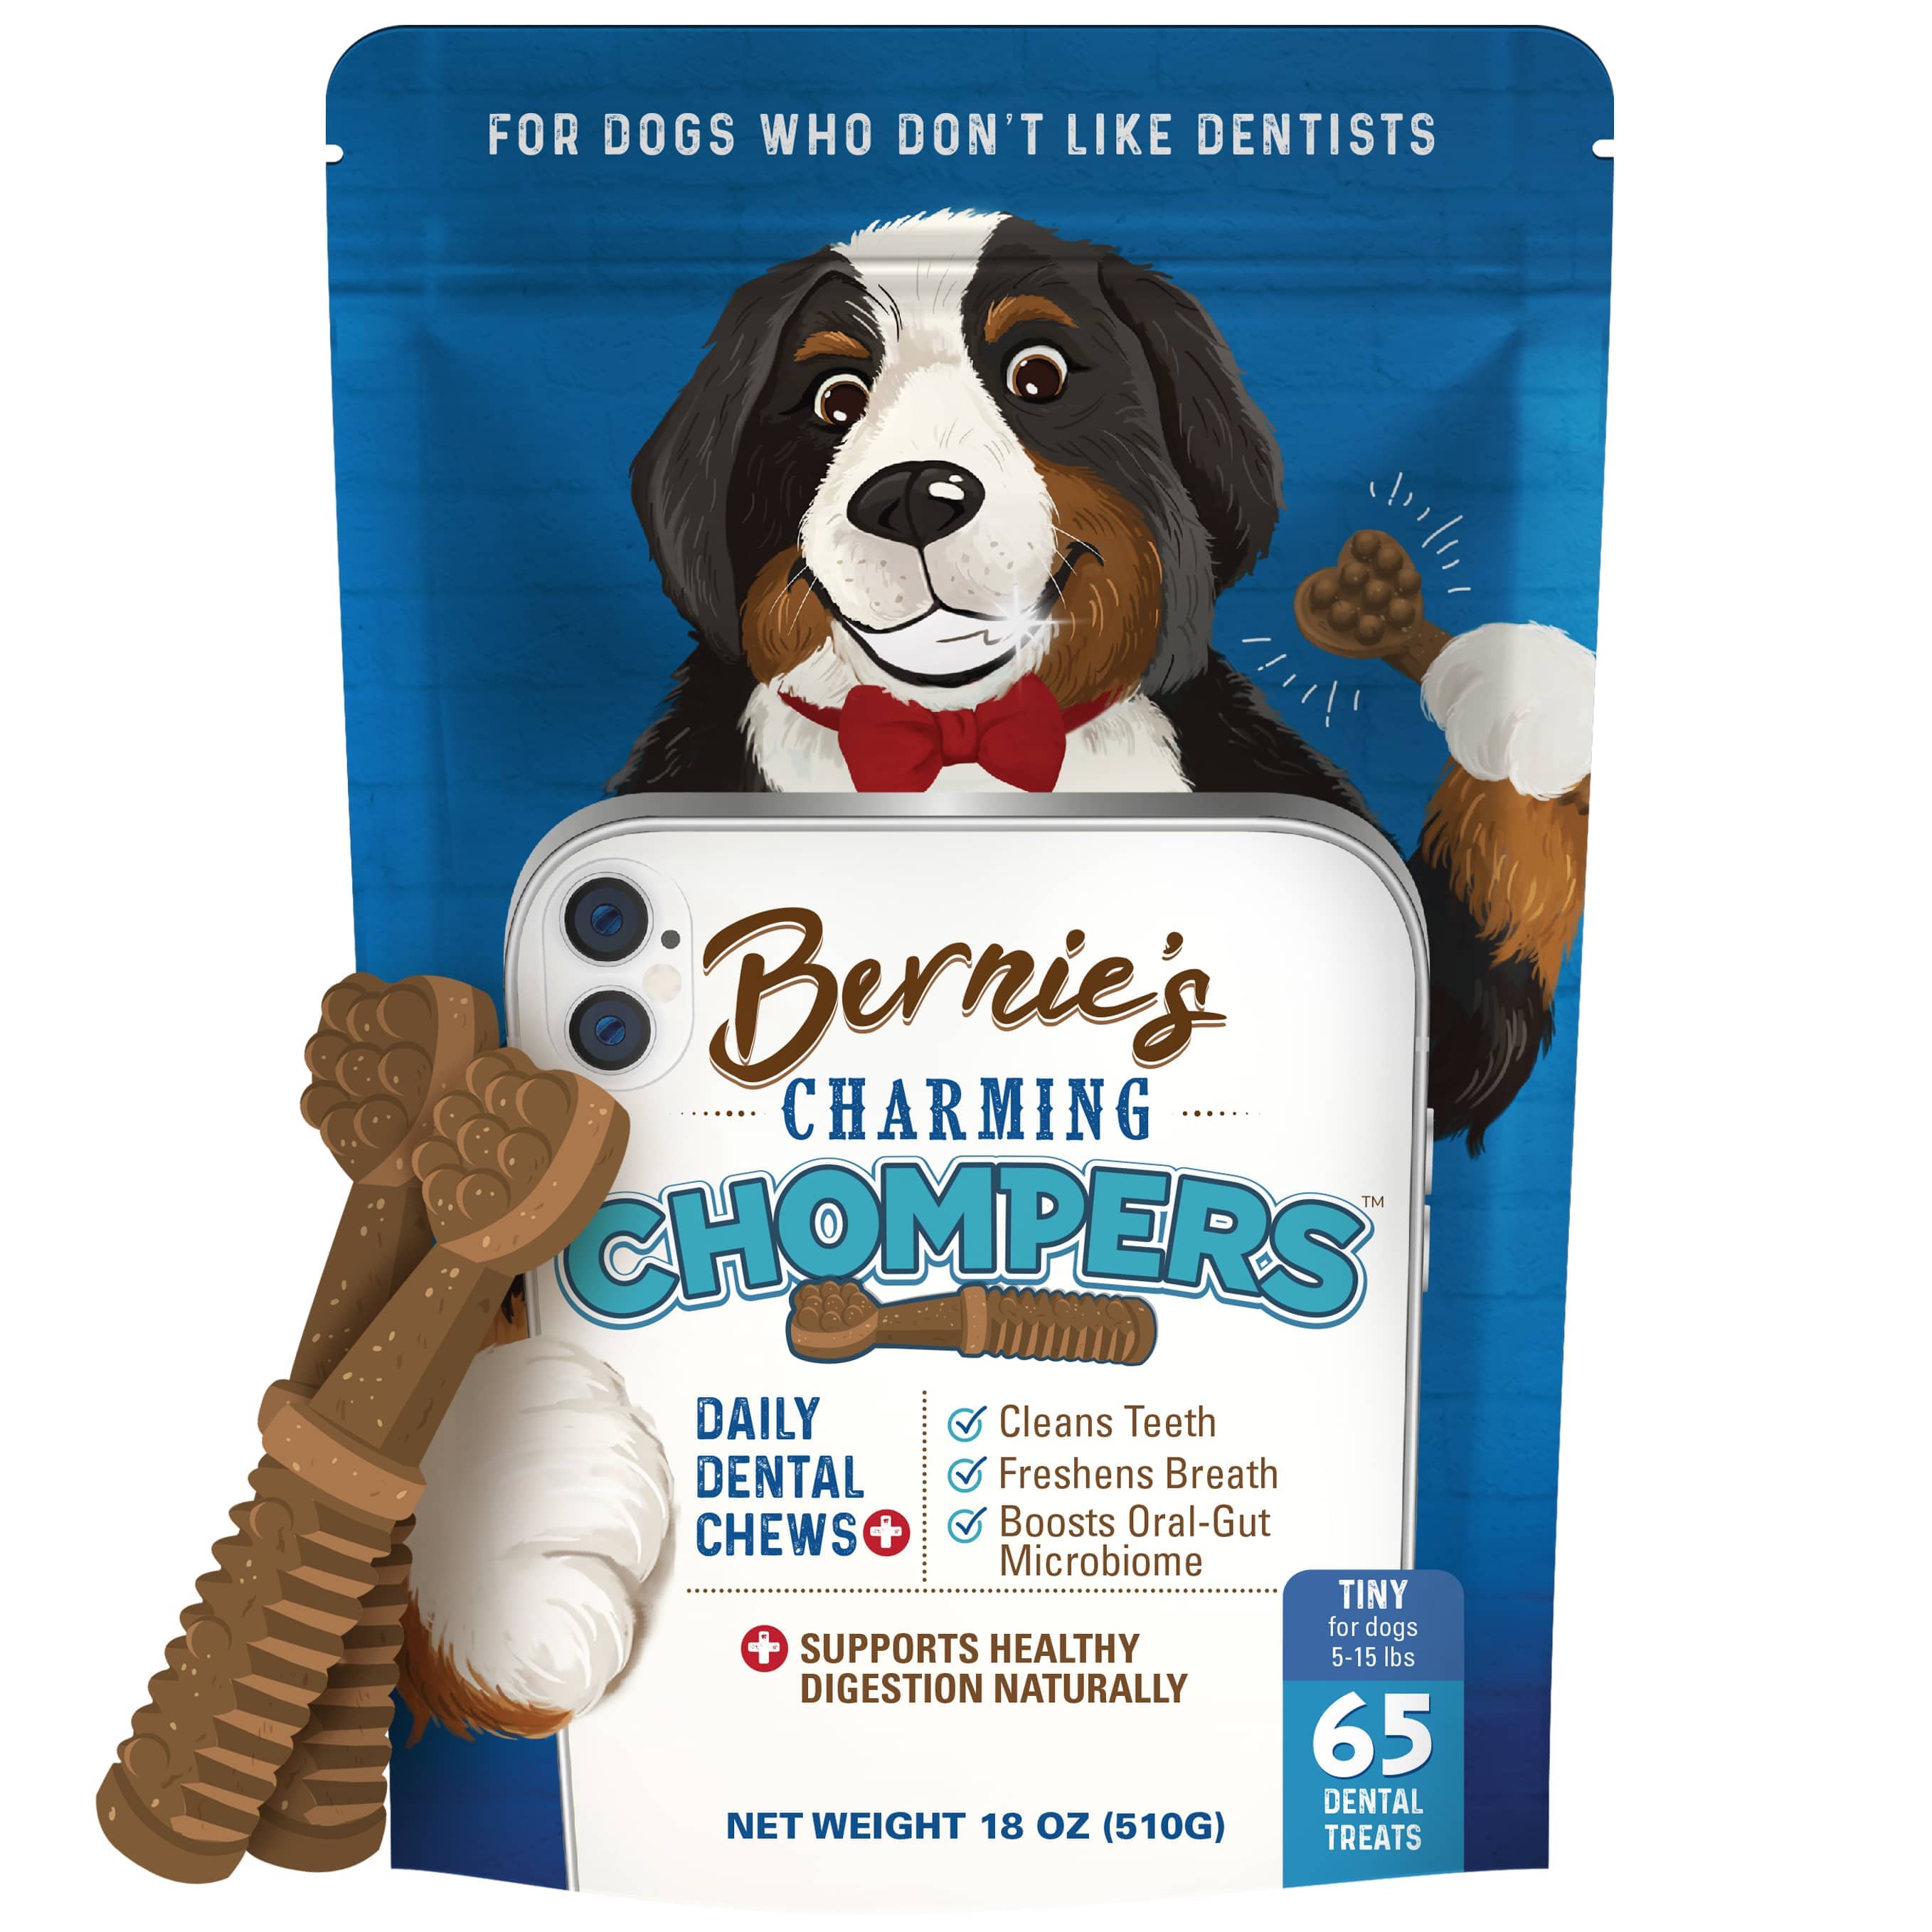 Bernie's Charming Chompers Digestive Supplement Bernie's Best Tiny Dogs (5-15 lb) 18 oz - 65 Count 